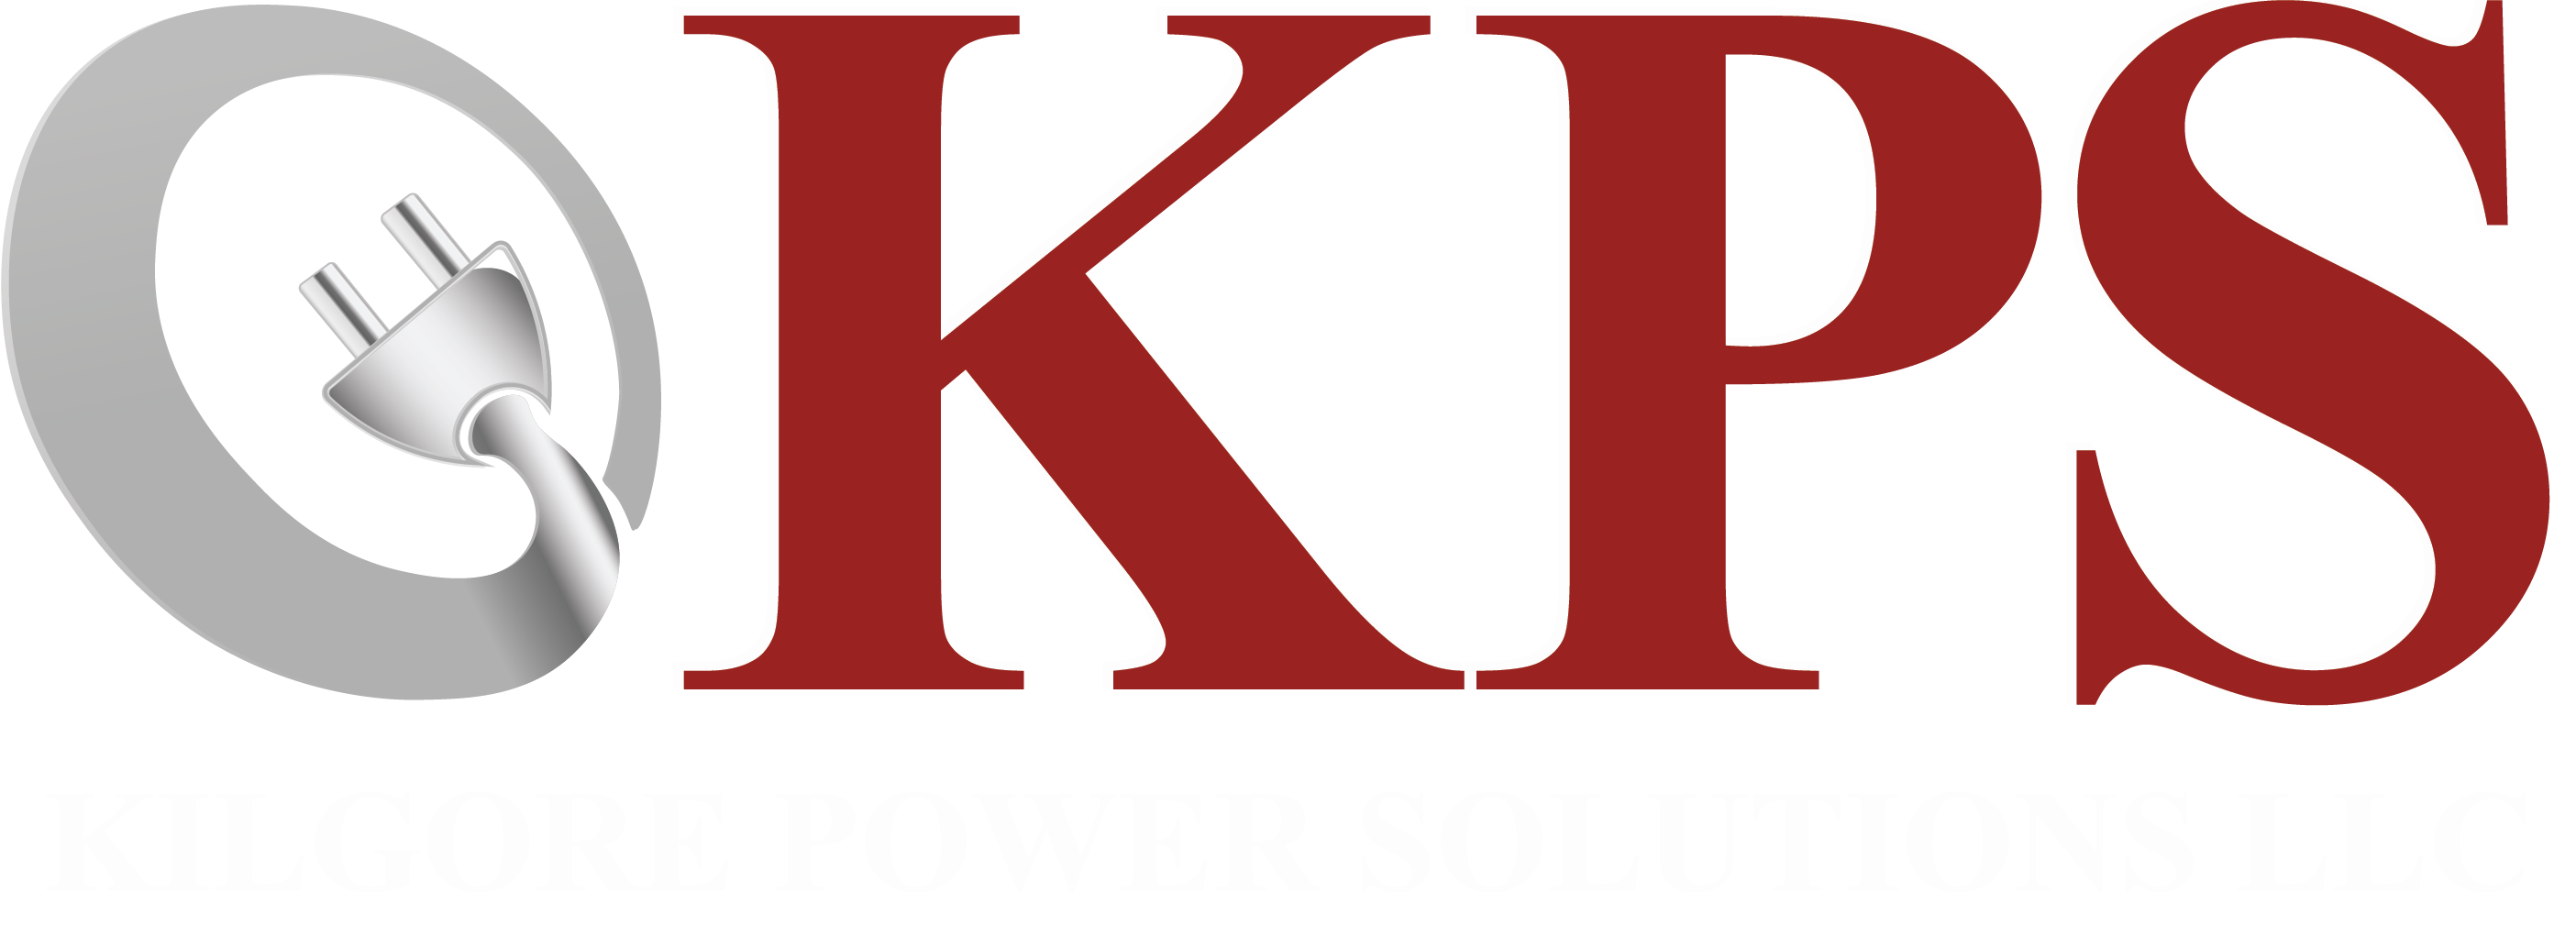 Kilgore Power Solutions